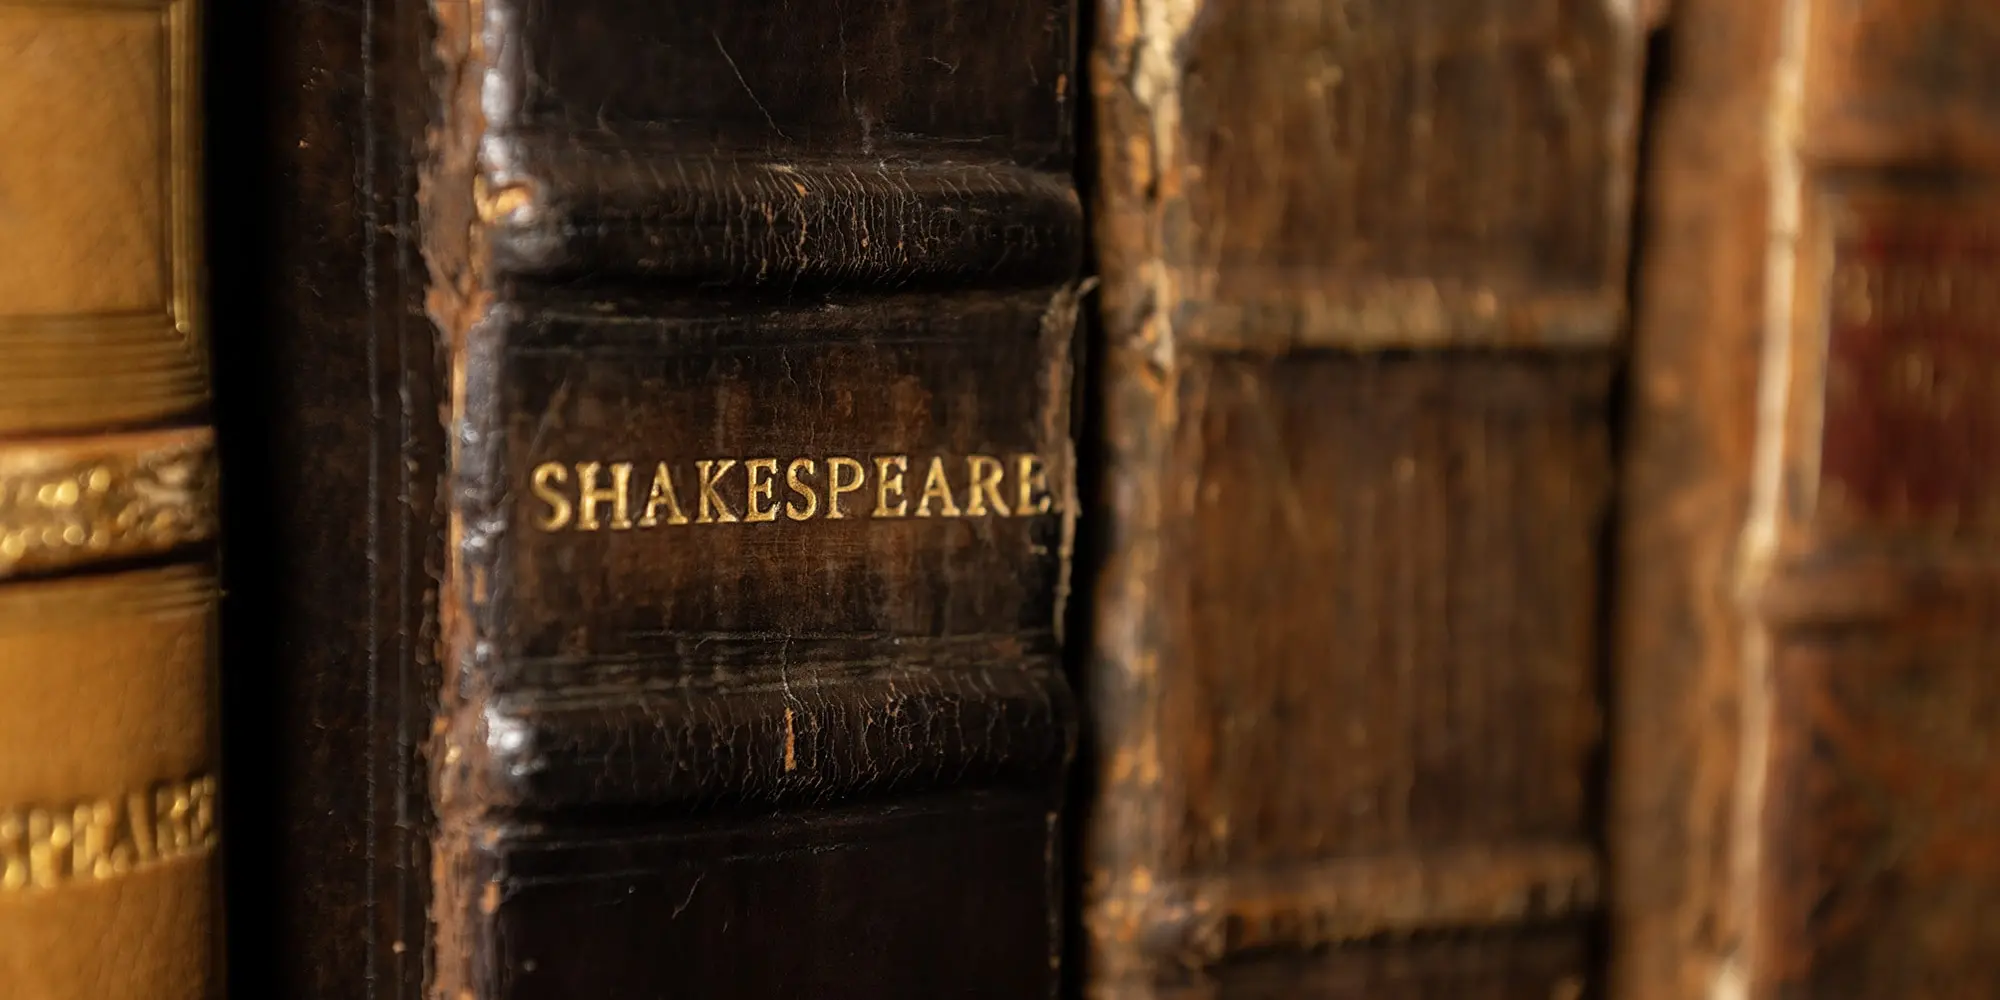 Shakespeare folios